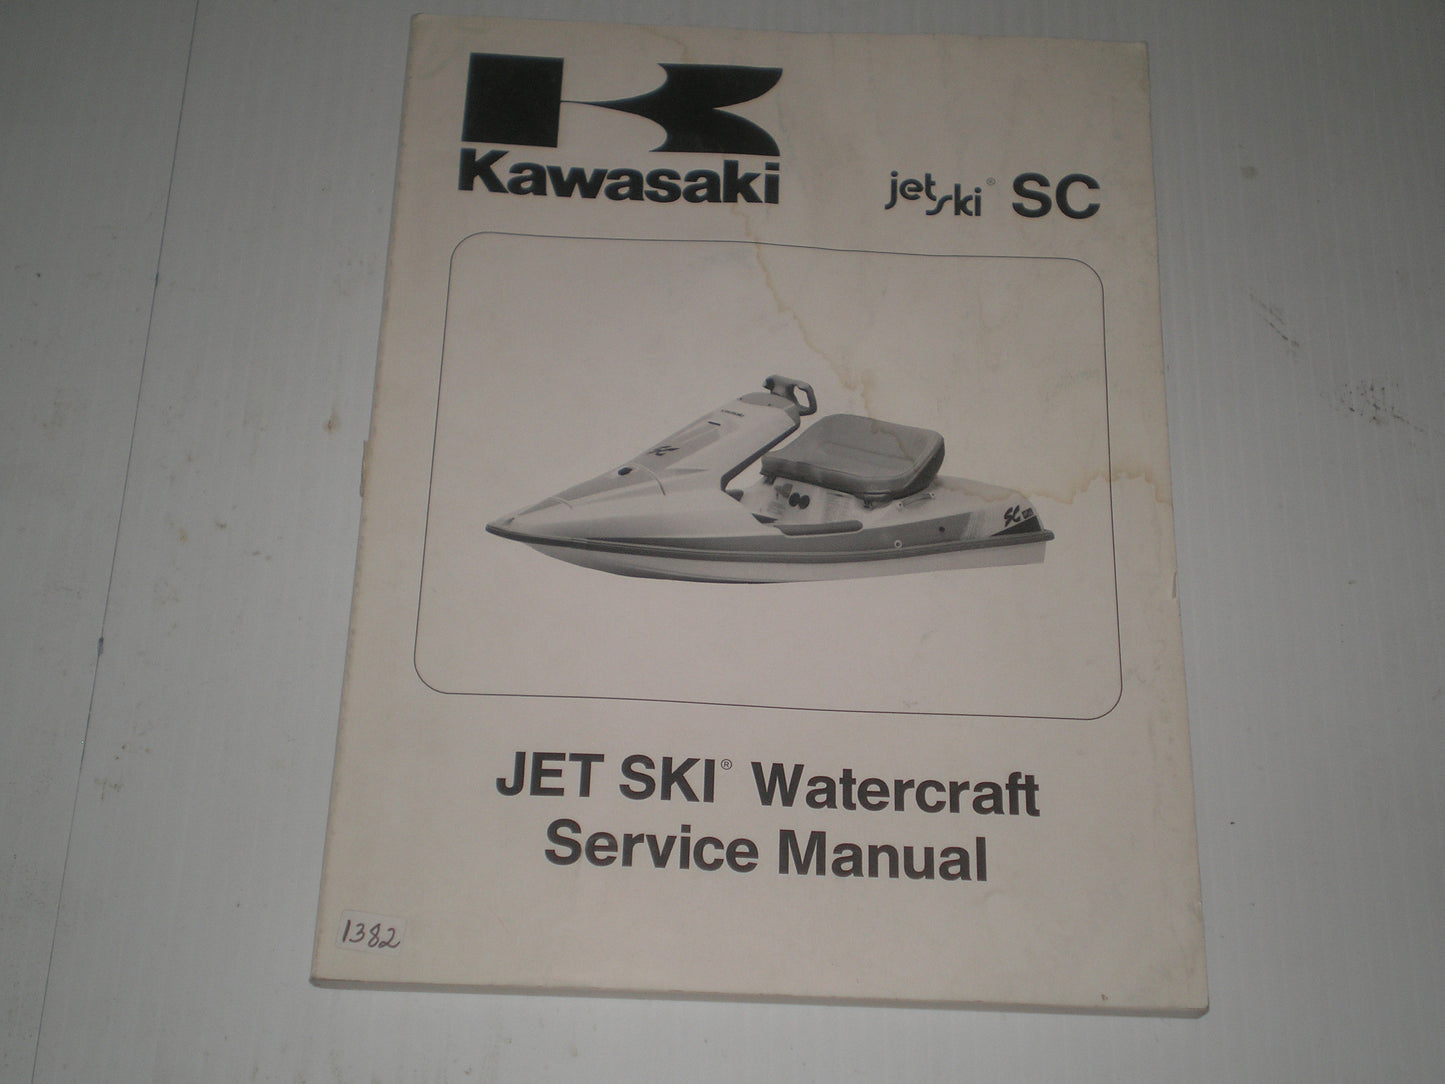 KAWASAKI JL650 A1  Jet Ski  SC  1991  Service Manual  99924-1149-01  #1382